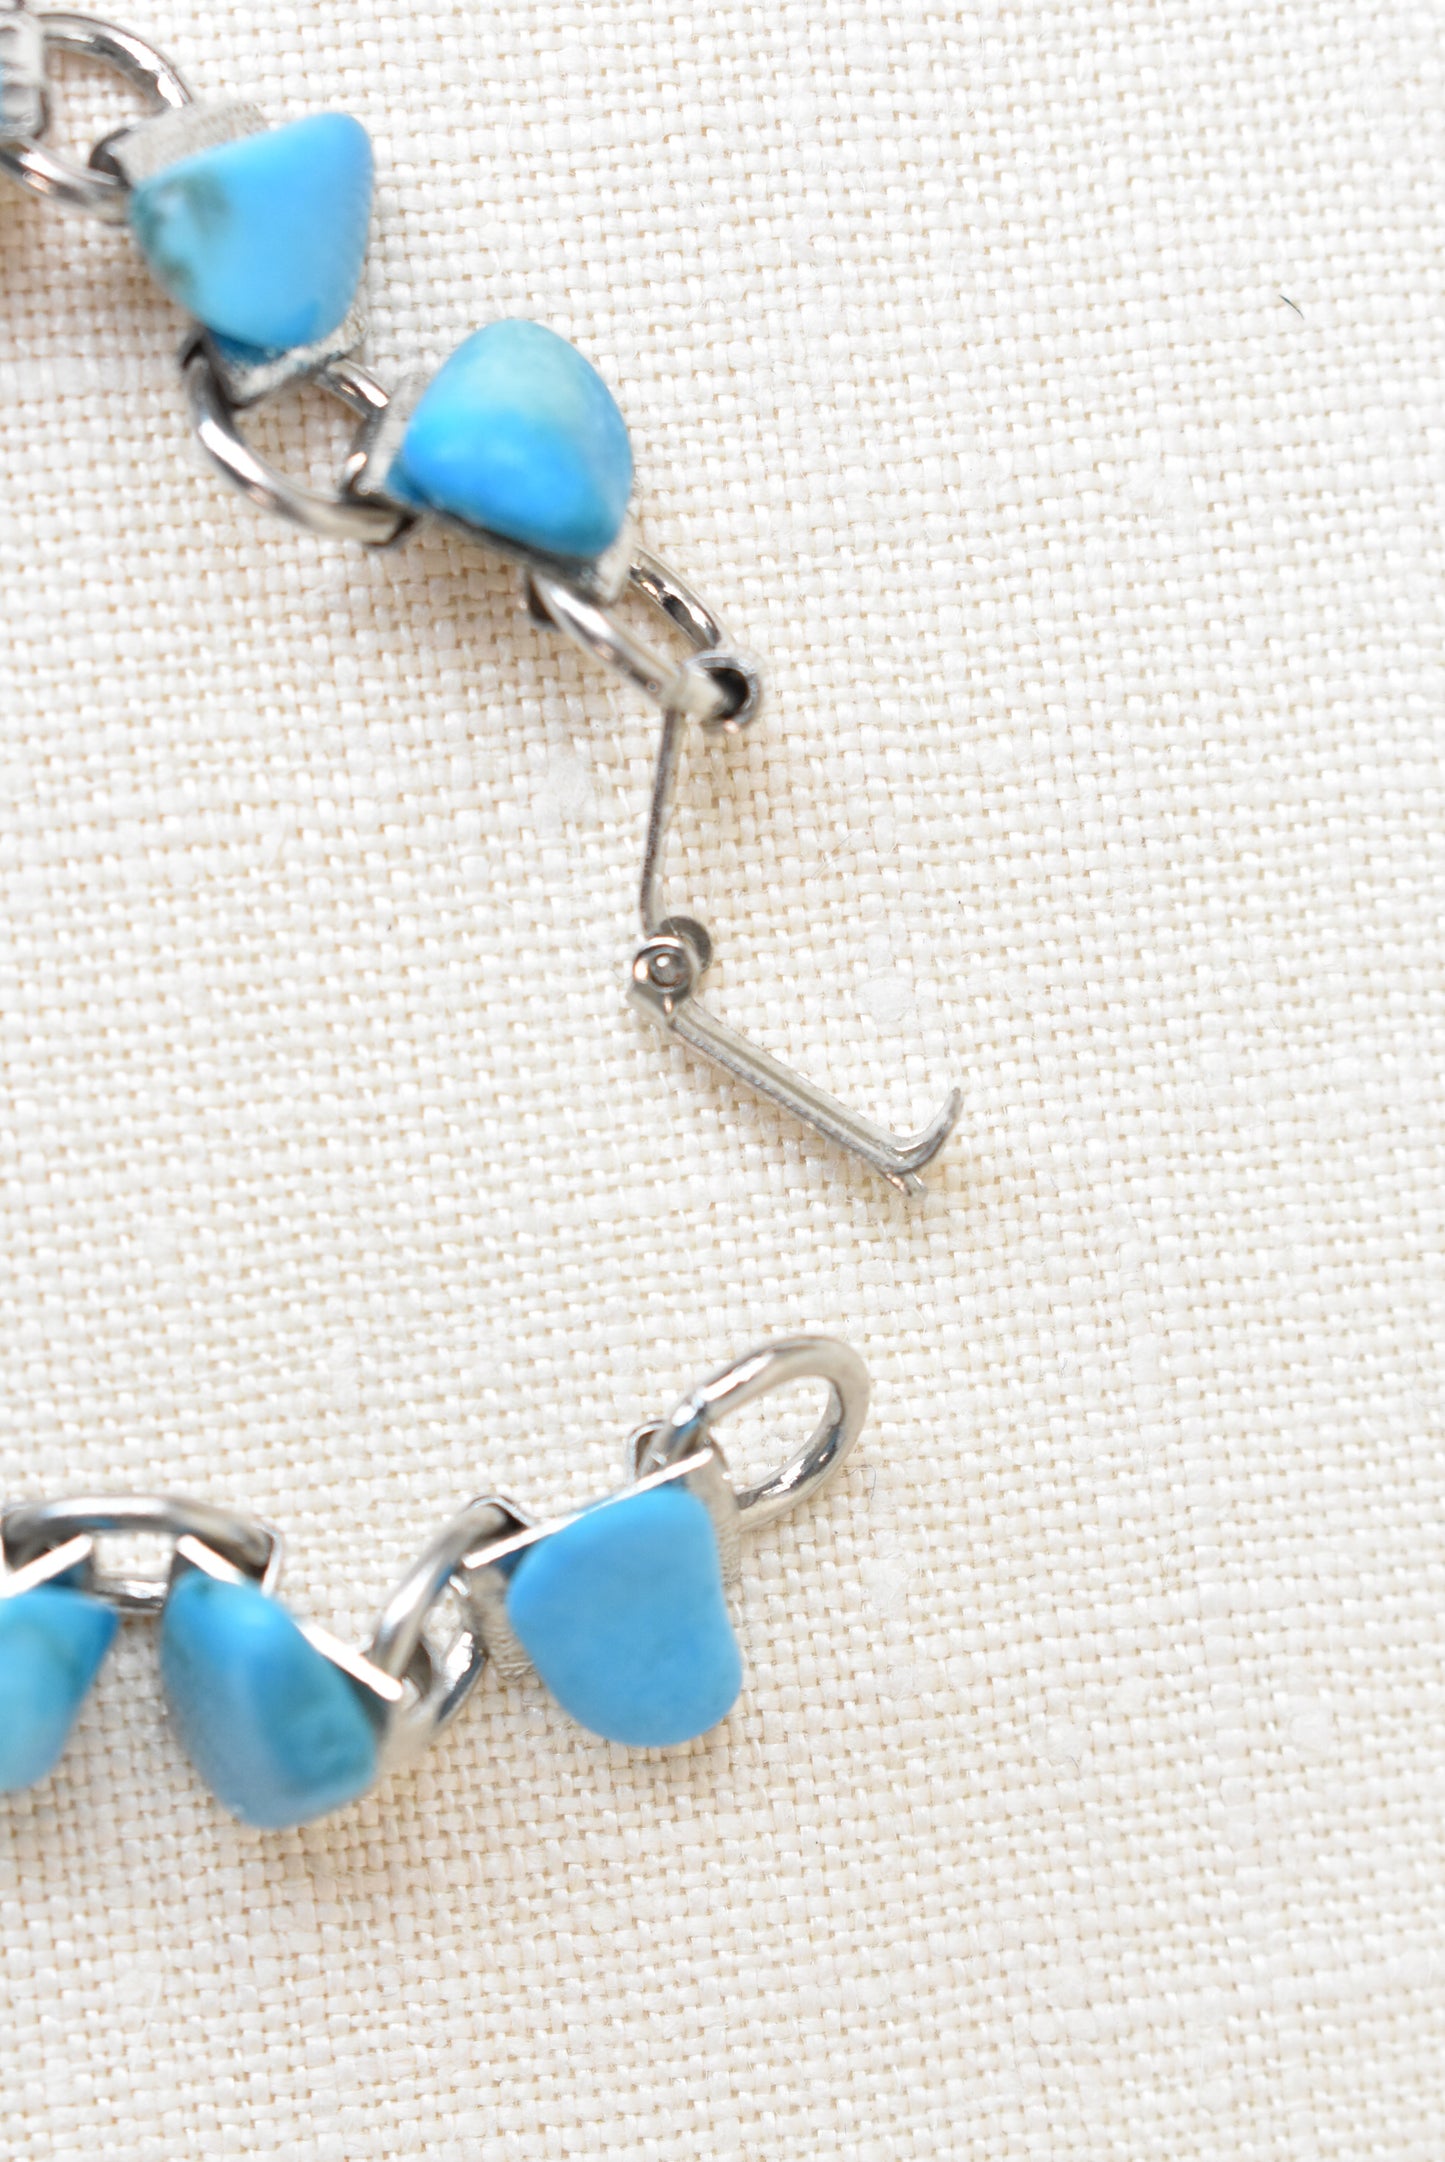 Turquoise coloured link bracelet